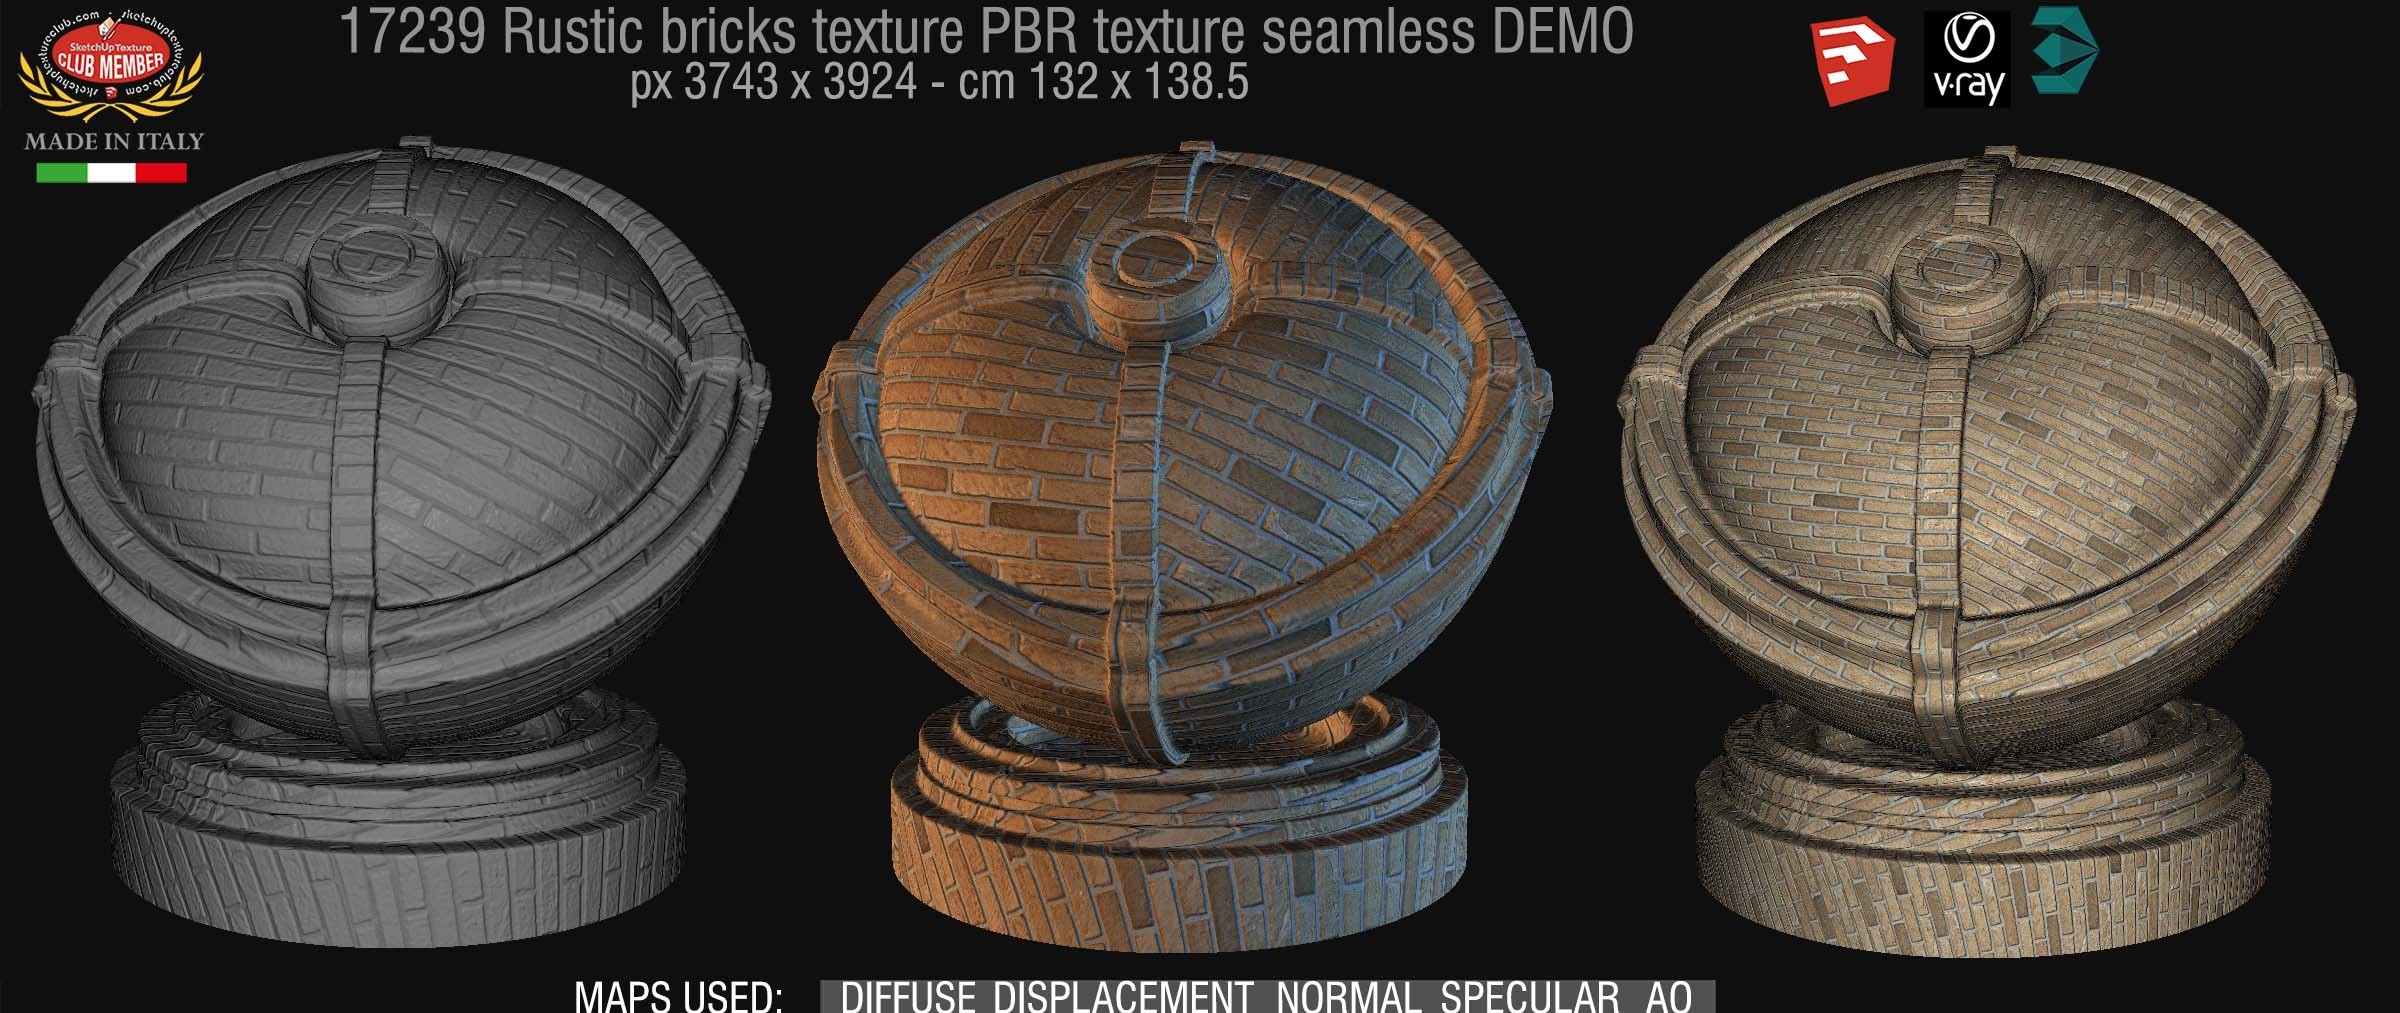 17239 rustic bricks PBR texture seamless DEMO